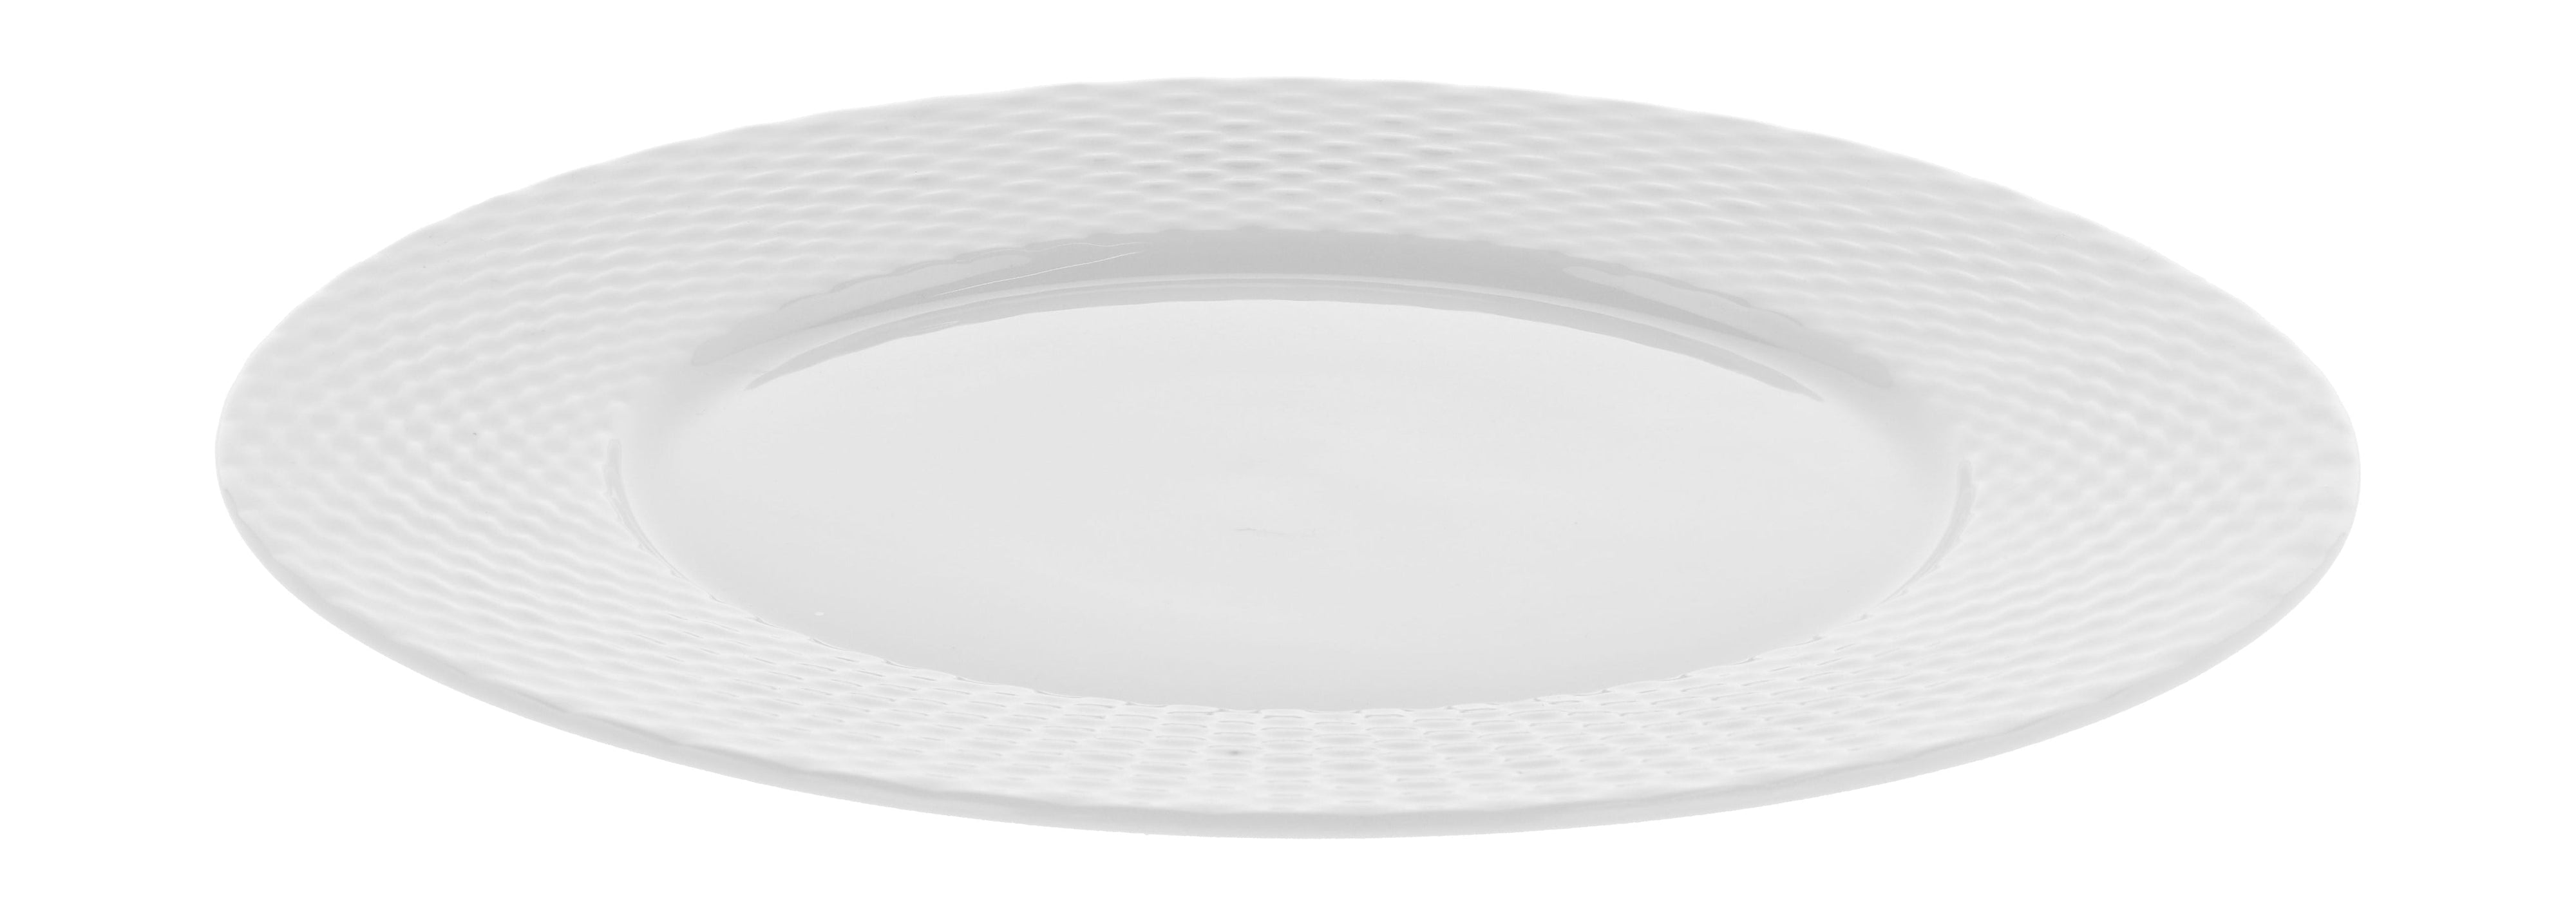 Pillivuyt Basket Plate, Ø28 cm